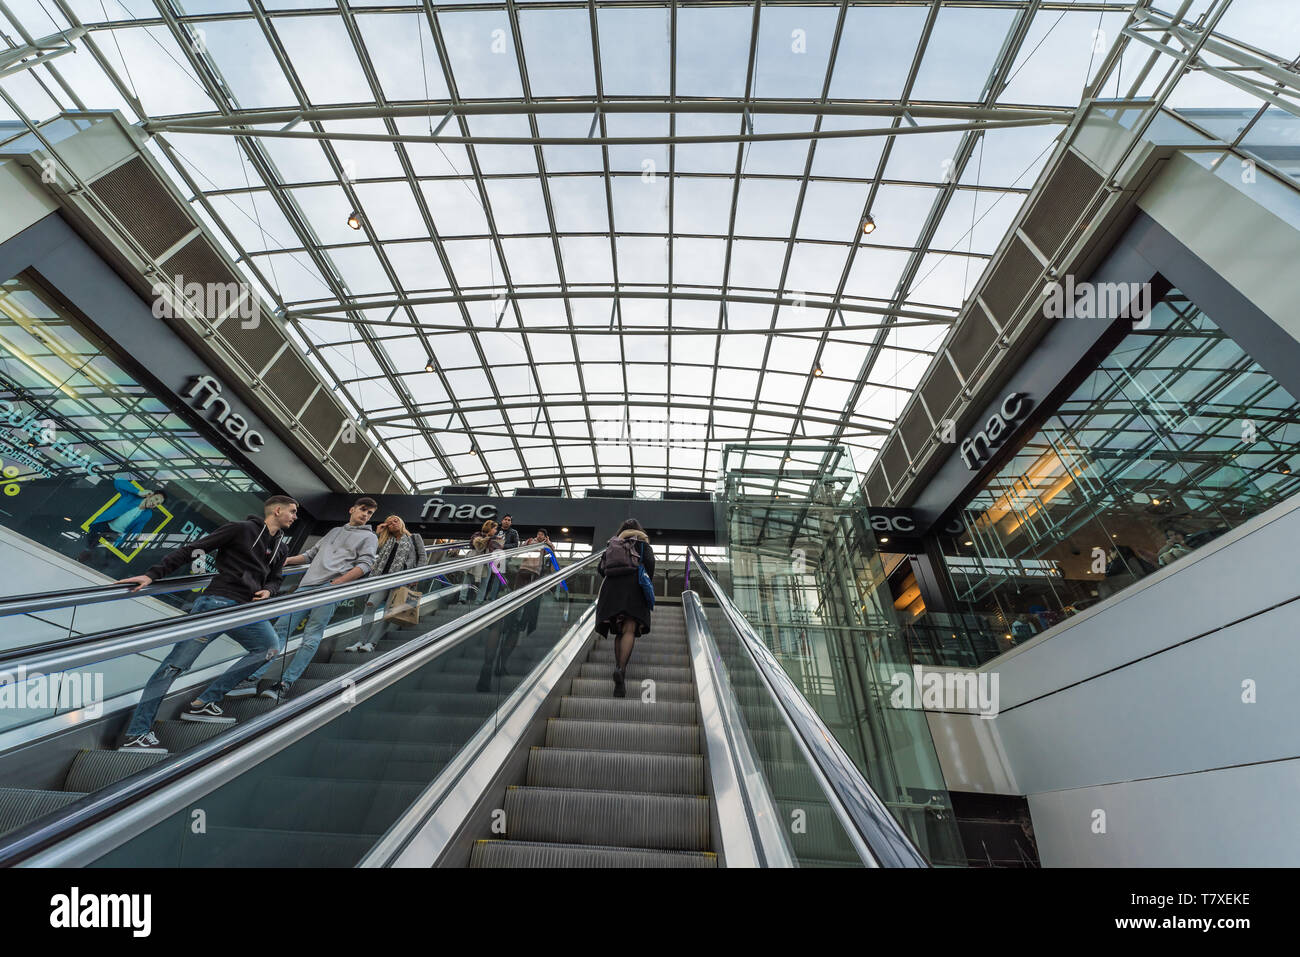 Brussels Belgium 03 10 2019 Escalator And Glass Ceiling